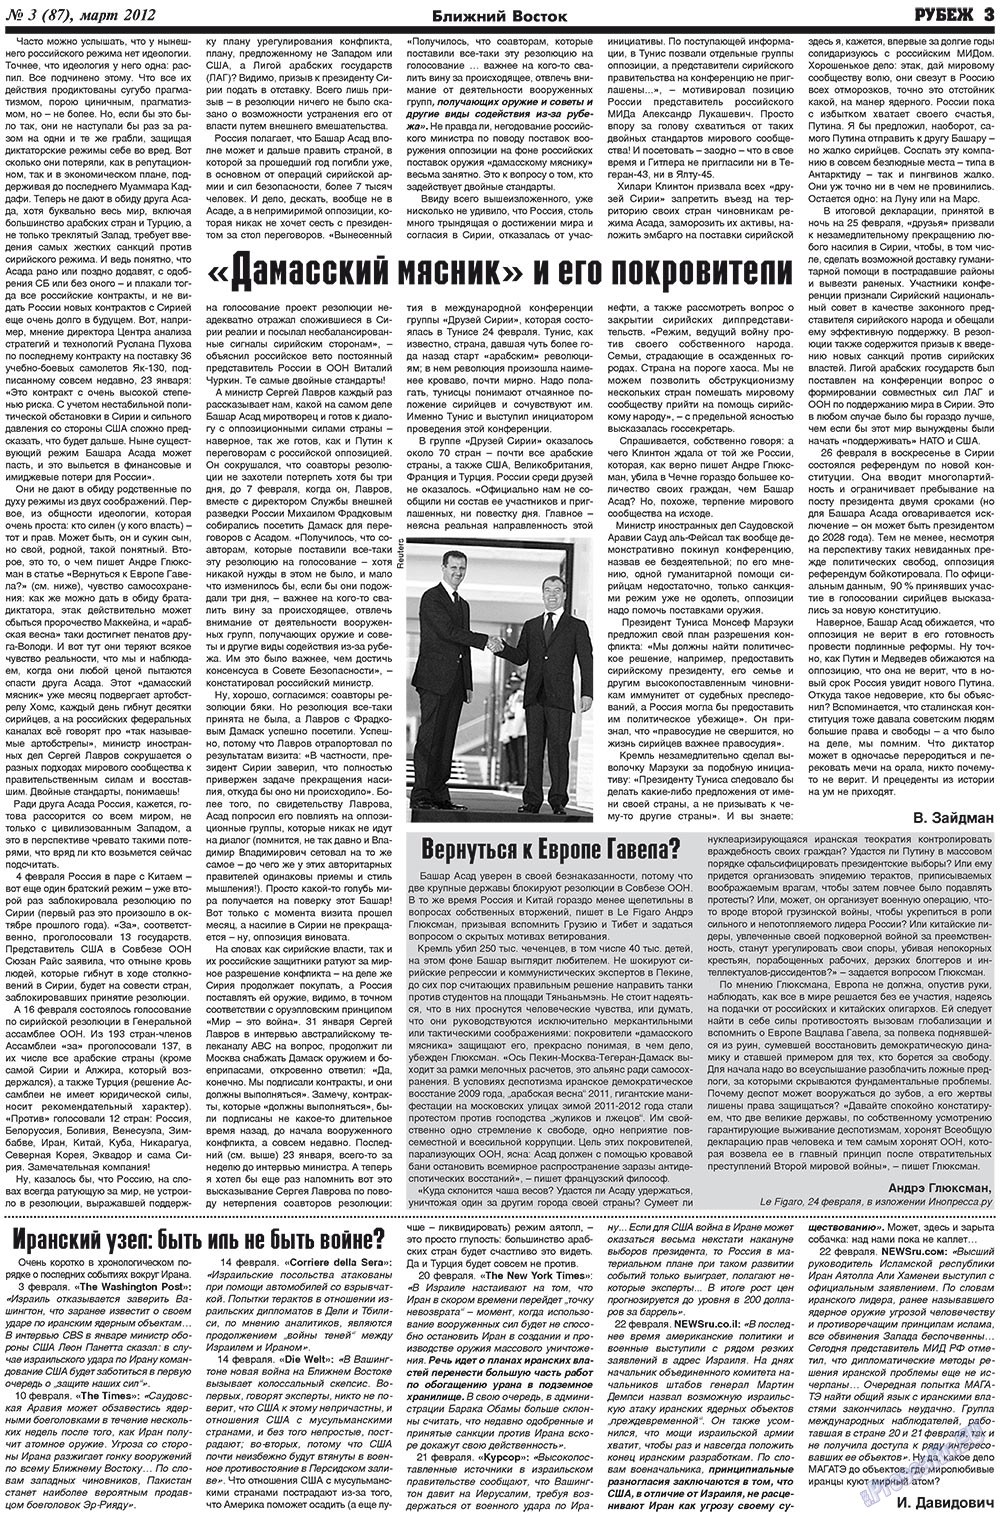 Рубеж, газета. 2012 №3 стр.3